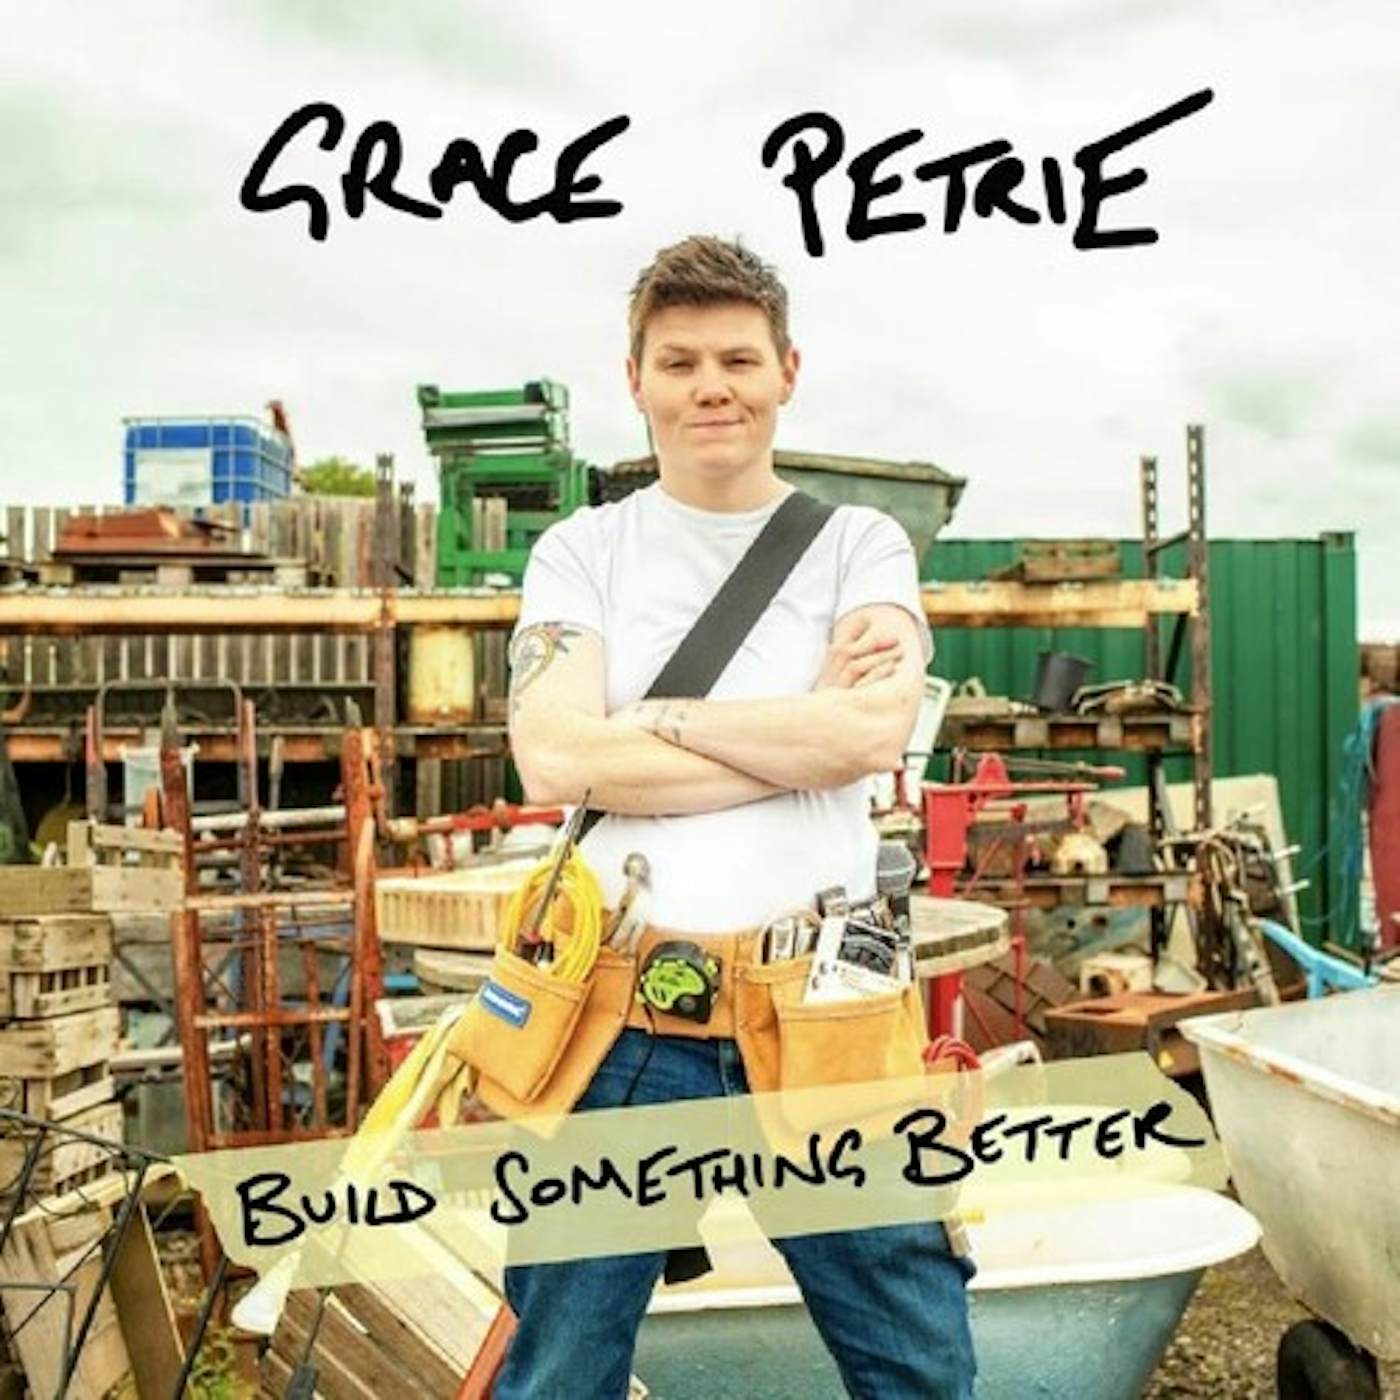 Grace Petrie Build Something Better Vinyl Record